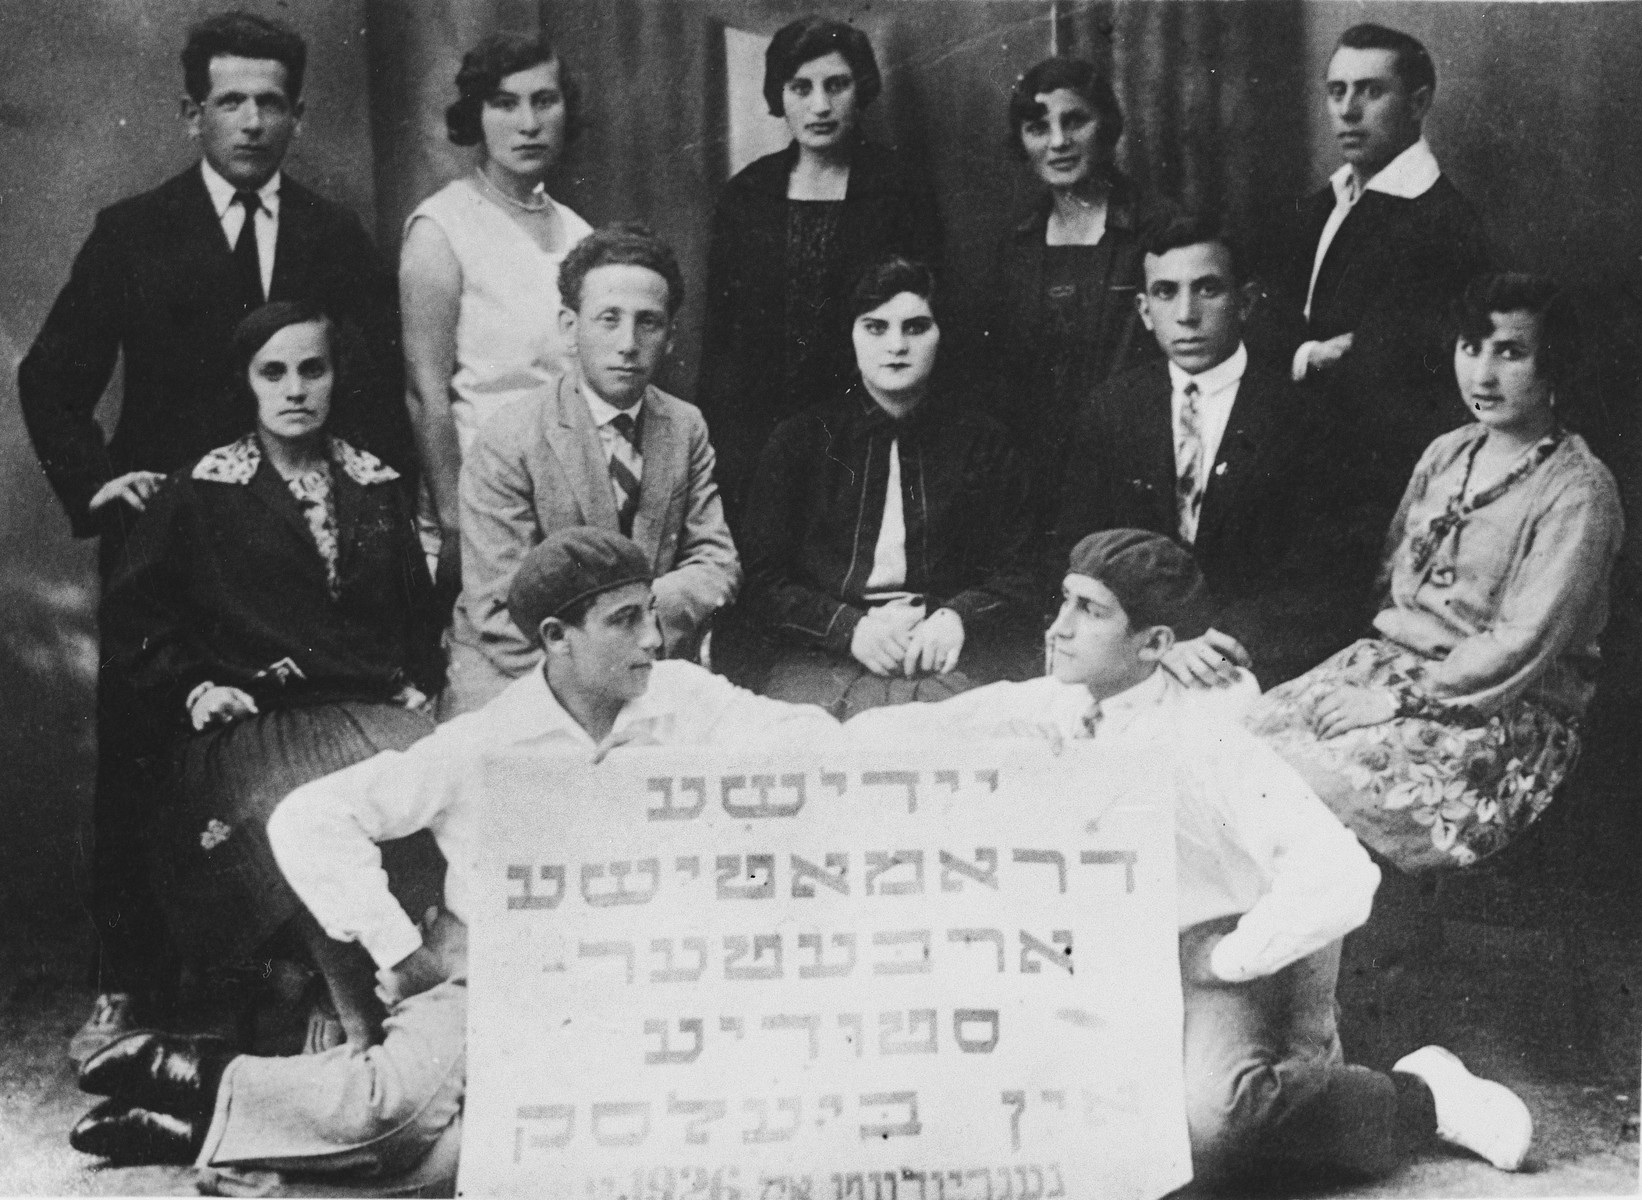 Members of the Jewish worker's drama group in Bielsk-Podlaski.